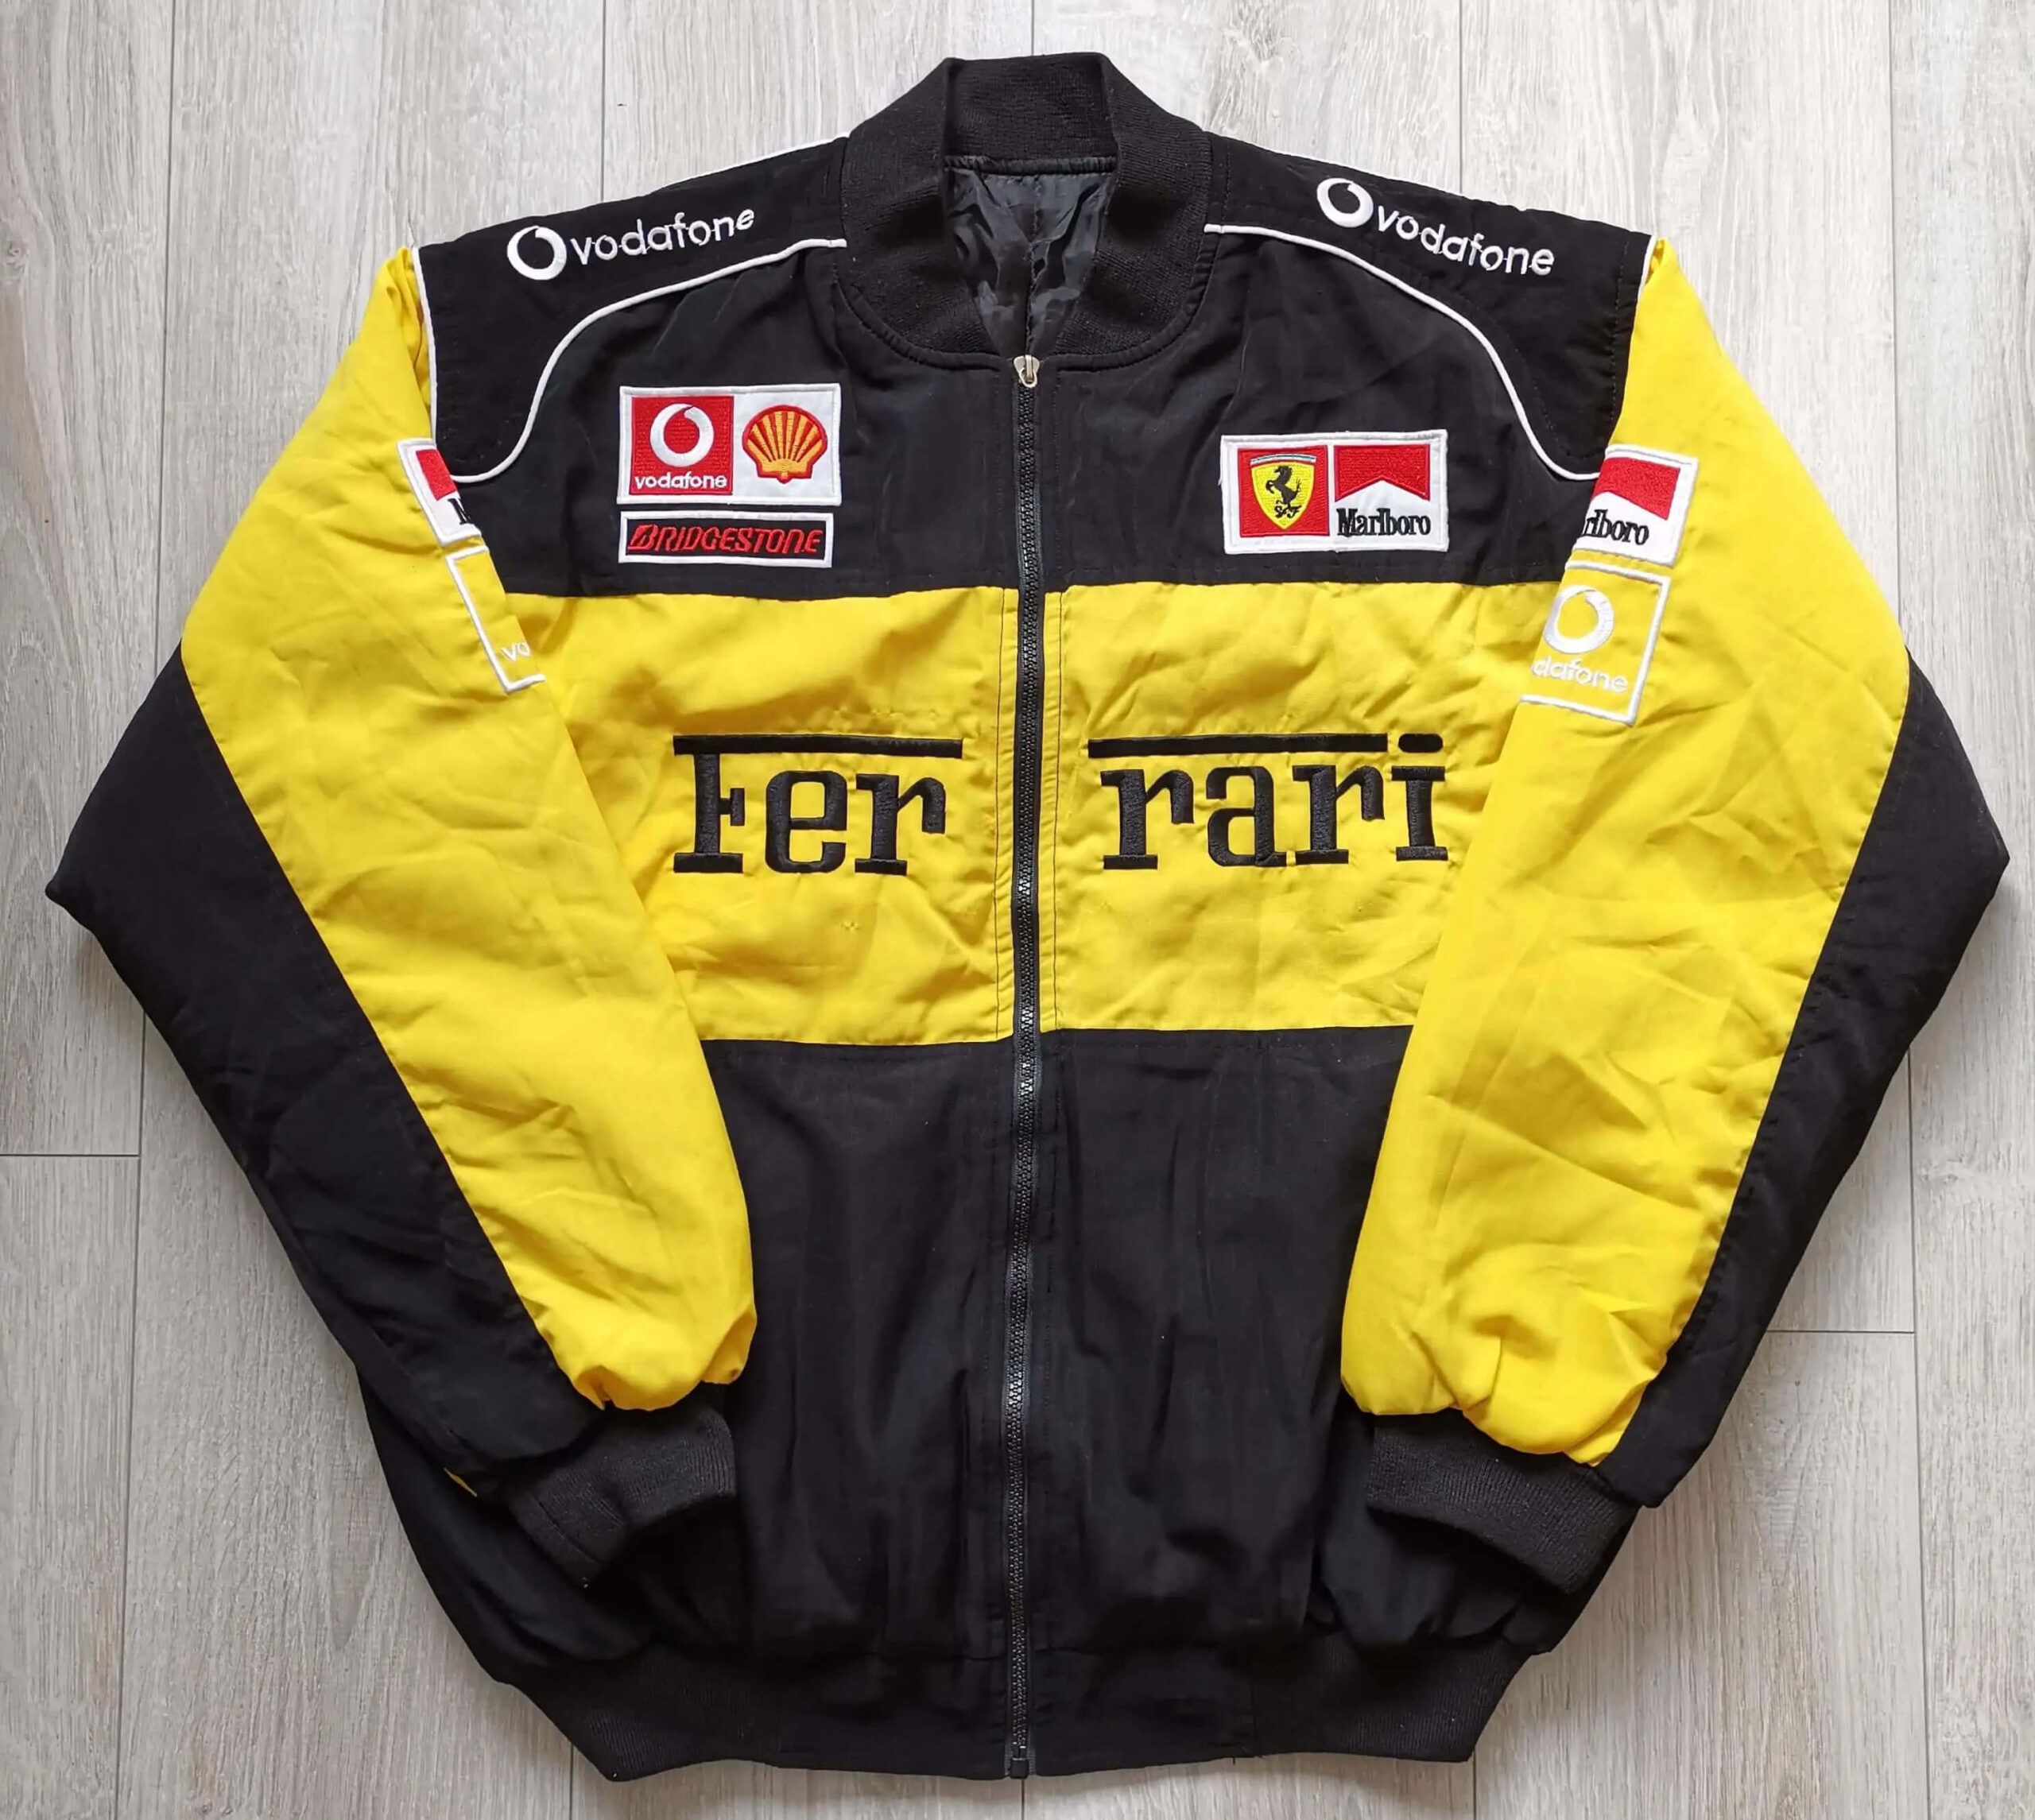 Michael Schumacher Ferrari Racing Bomber Jacket - Maker of Jacket